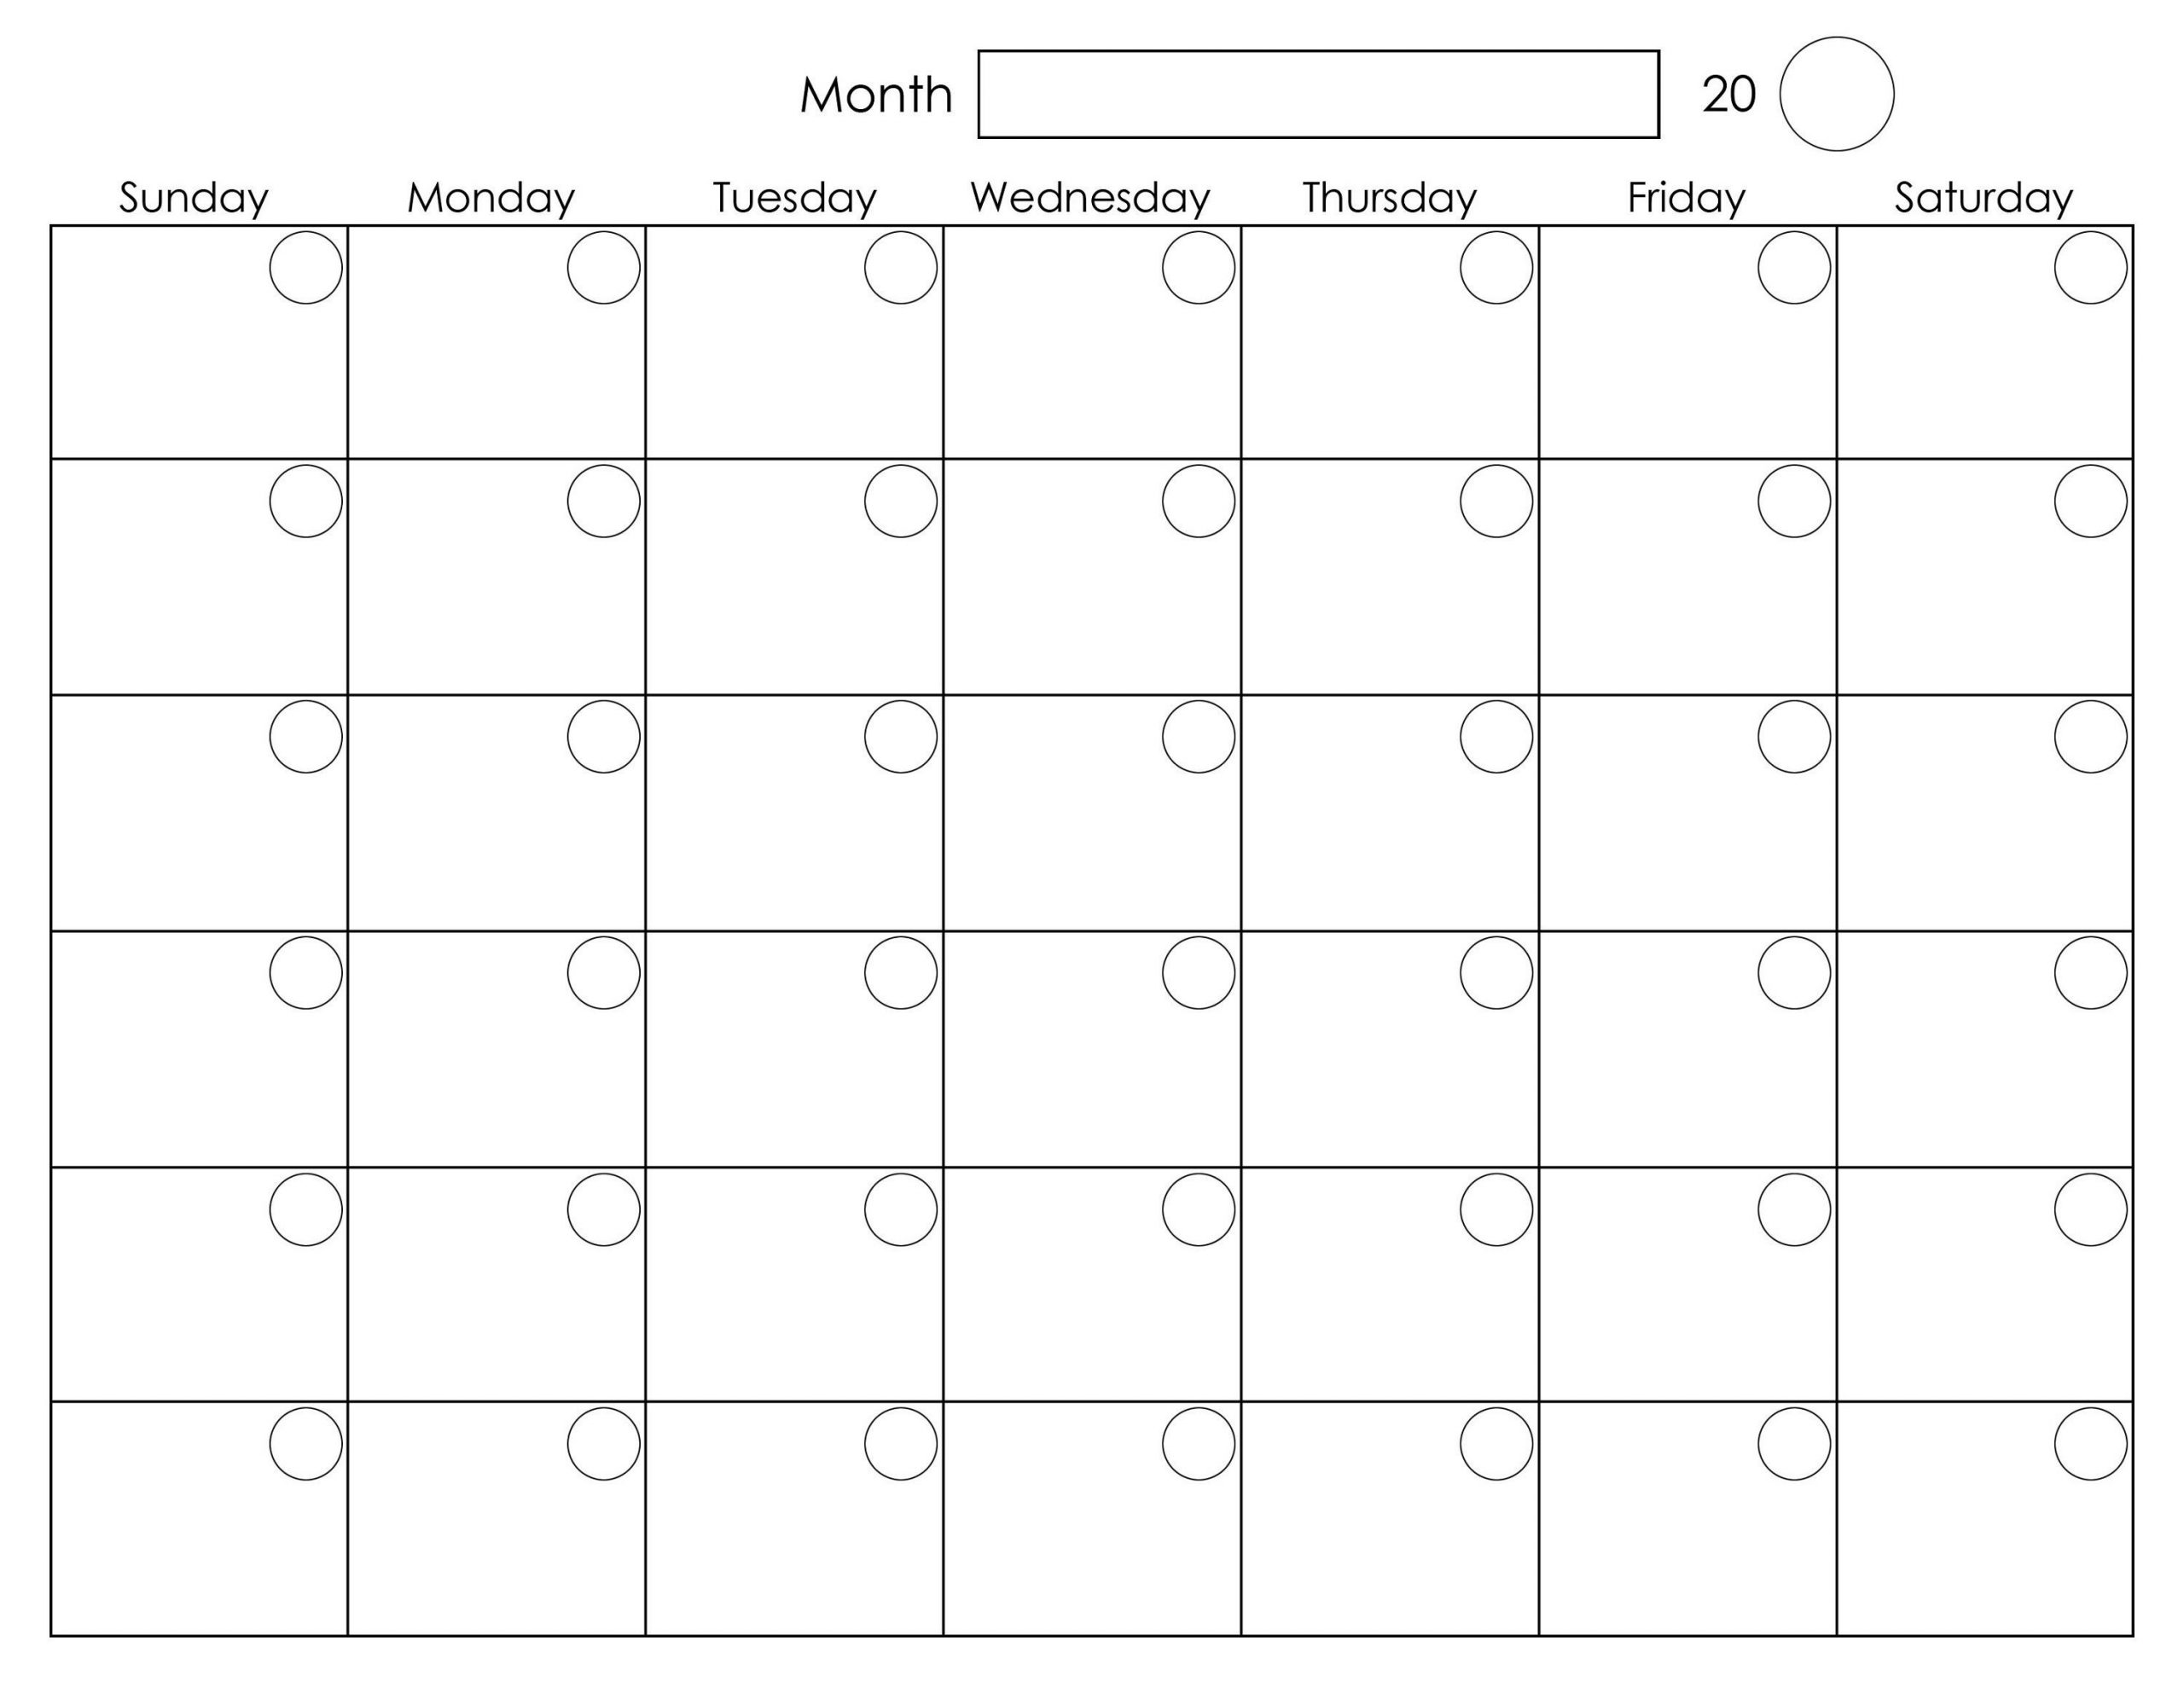 Printable Blank Monthly Calendar | Calendar Printables-Blank Monthly Calendar Template To Fill In